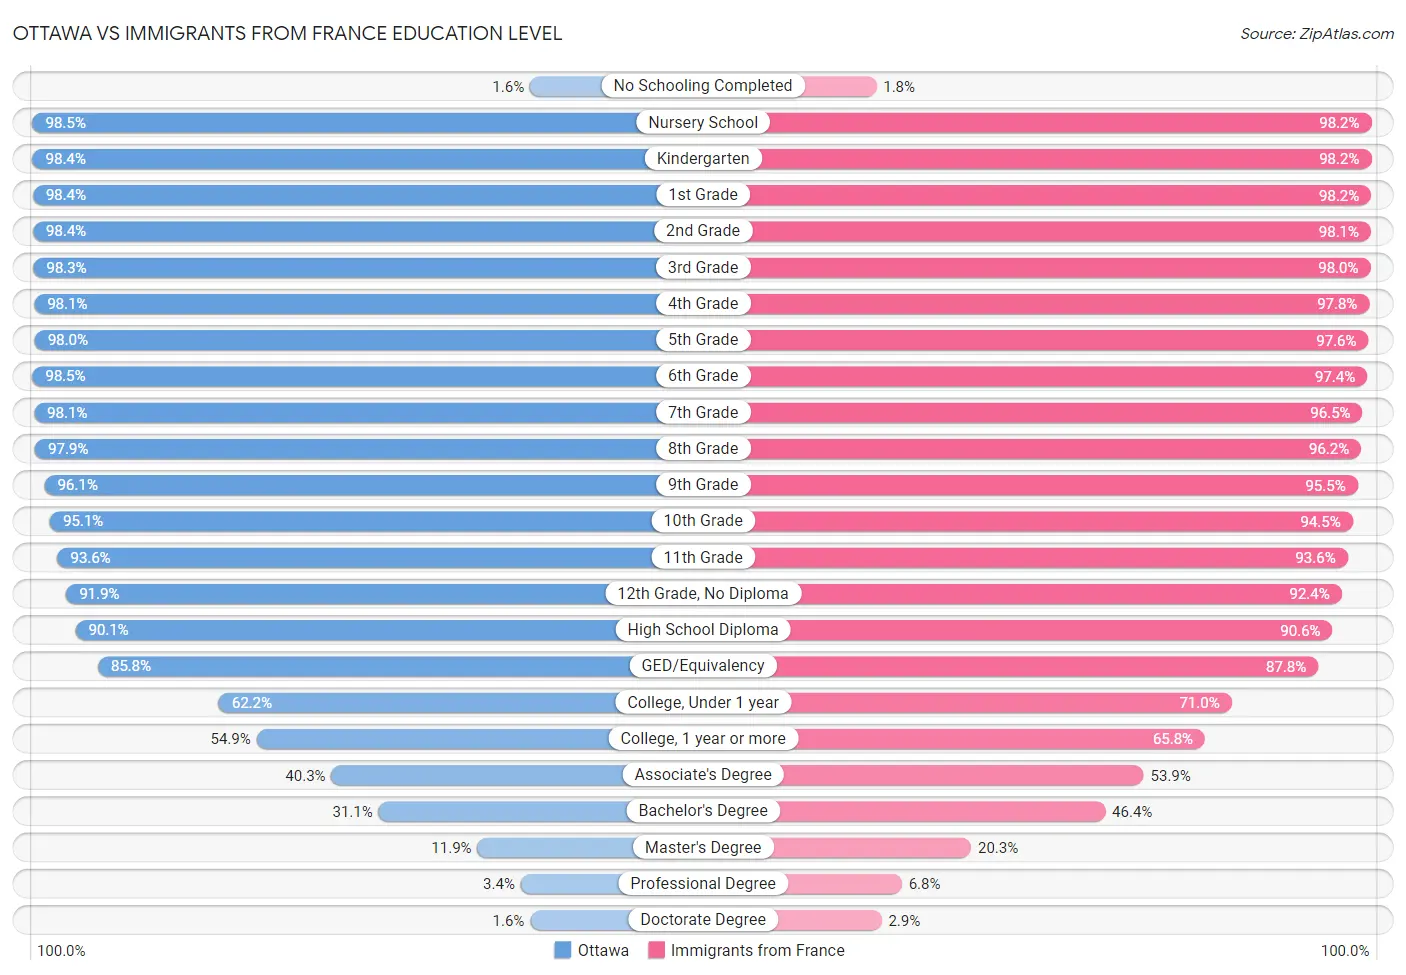 Ottawa vs Immigrants from France Education Level